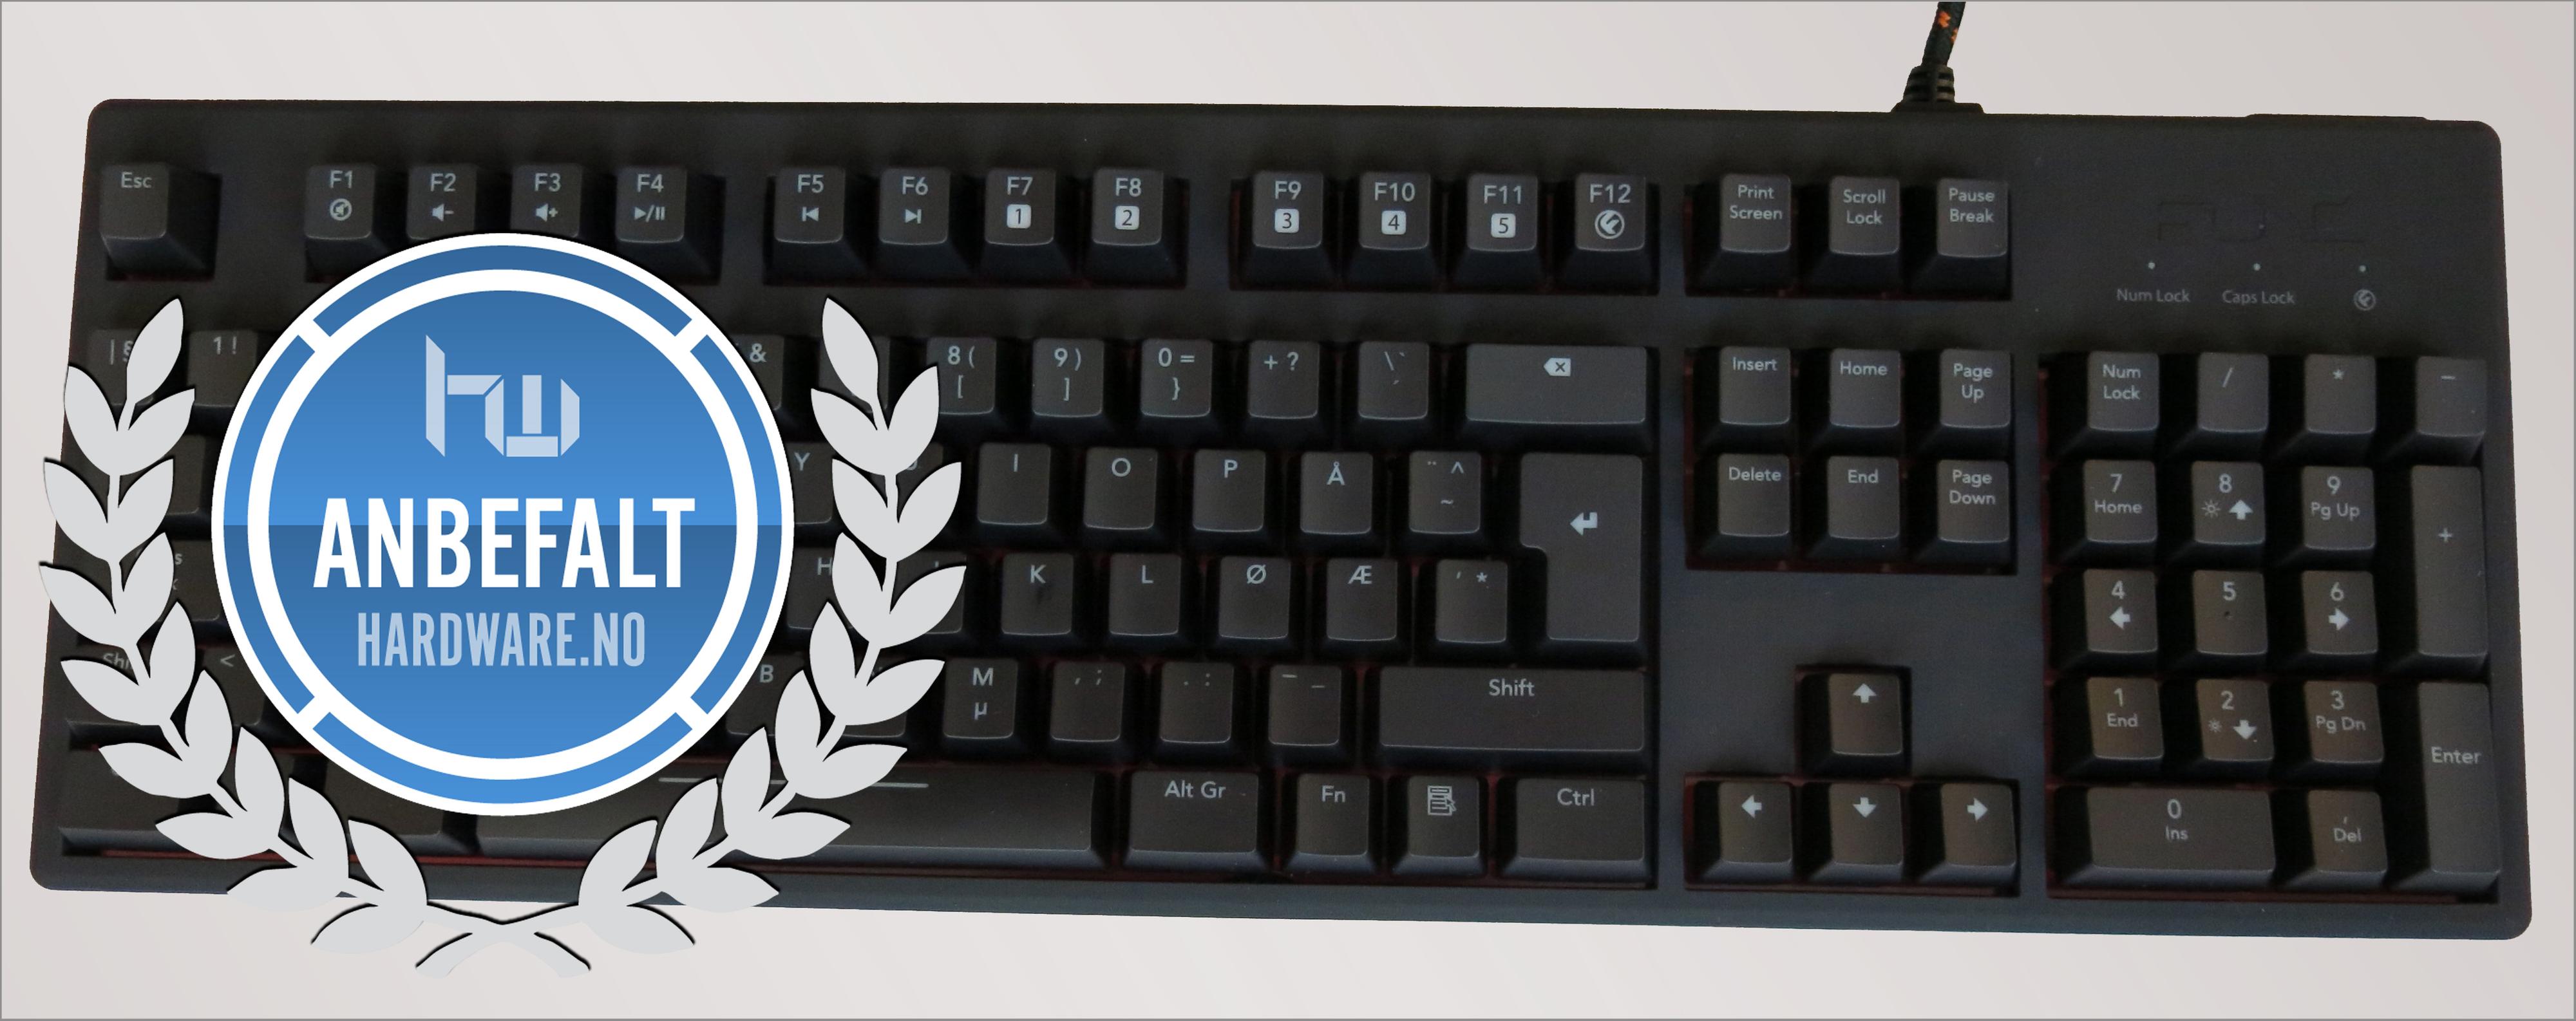 Func KB-460 anbefales som et godt og allsidig spilltastatur.